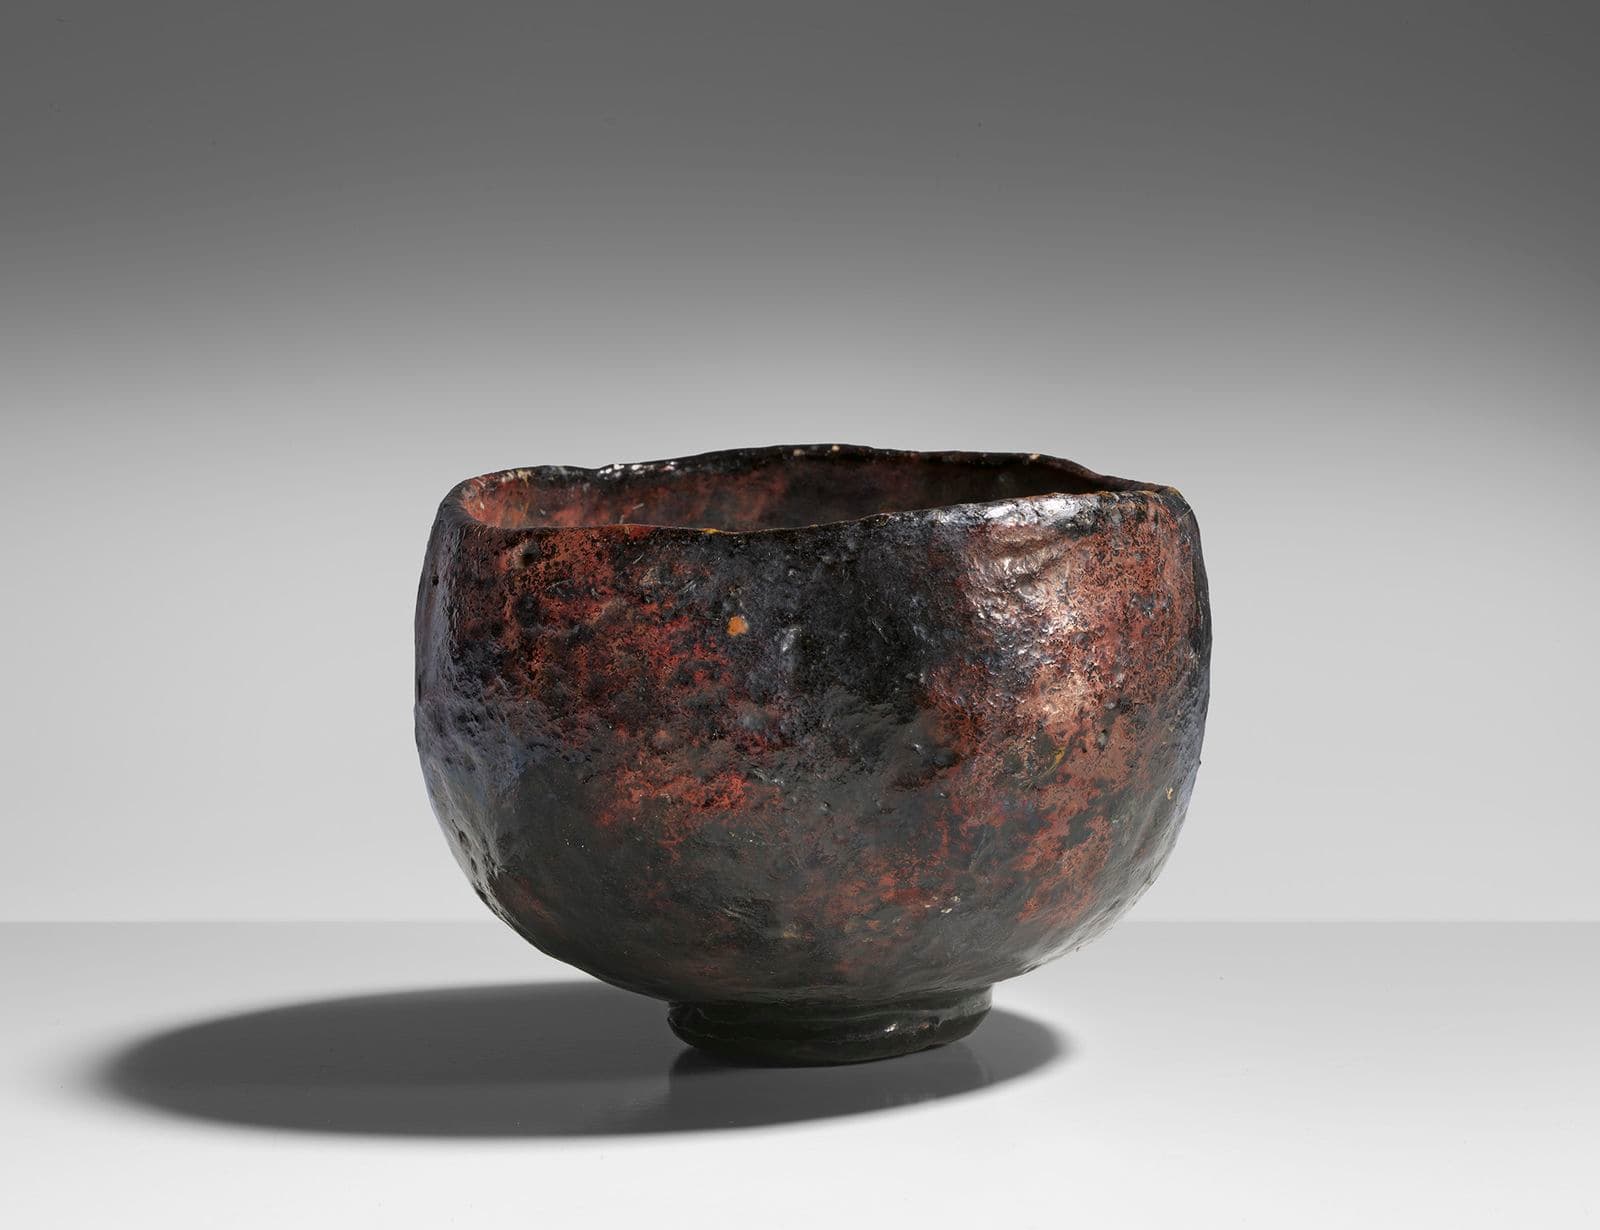 Brown glazed ceramic textured bowl